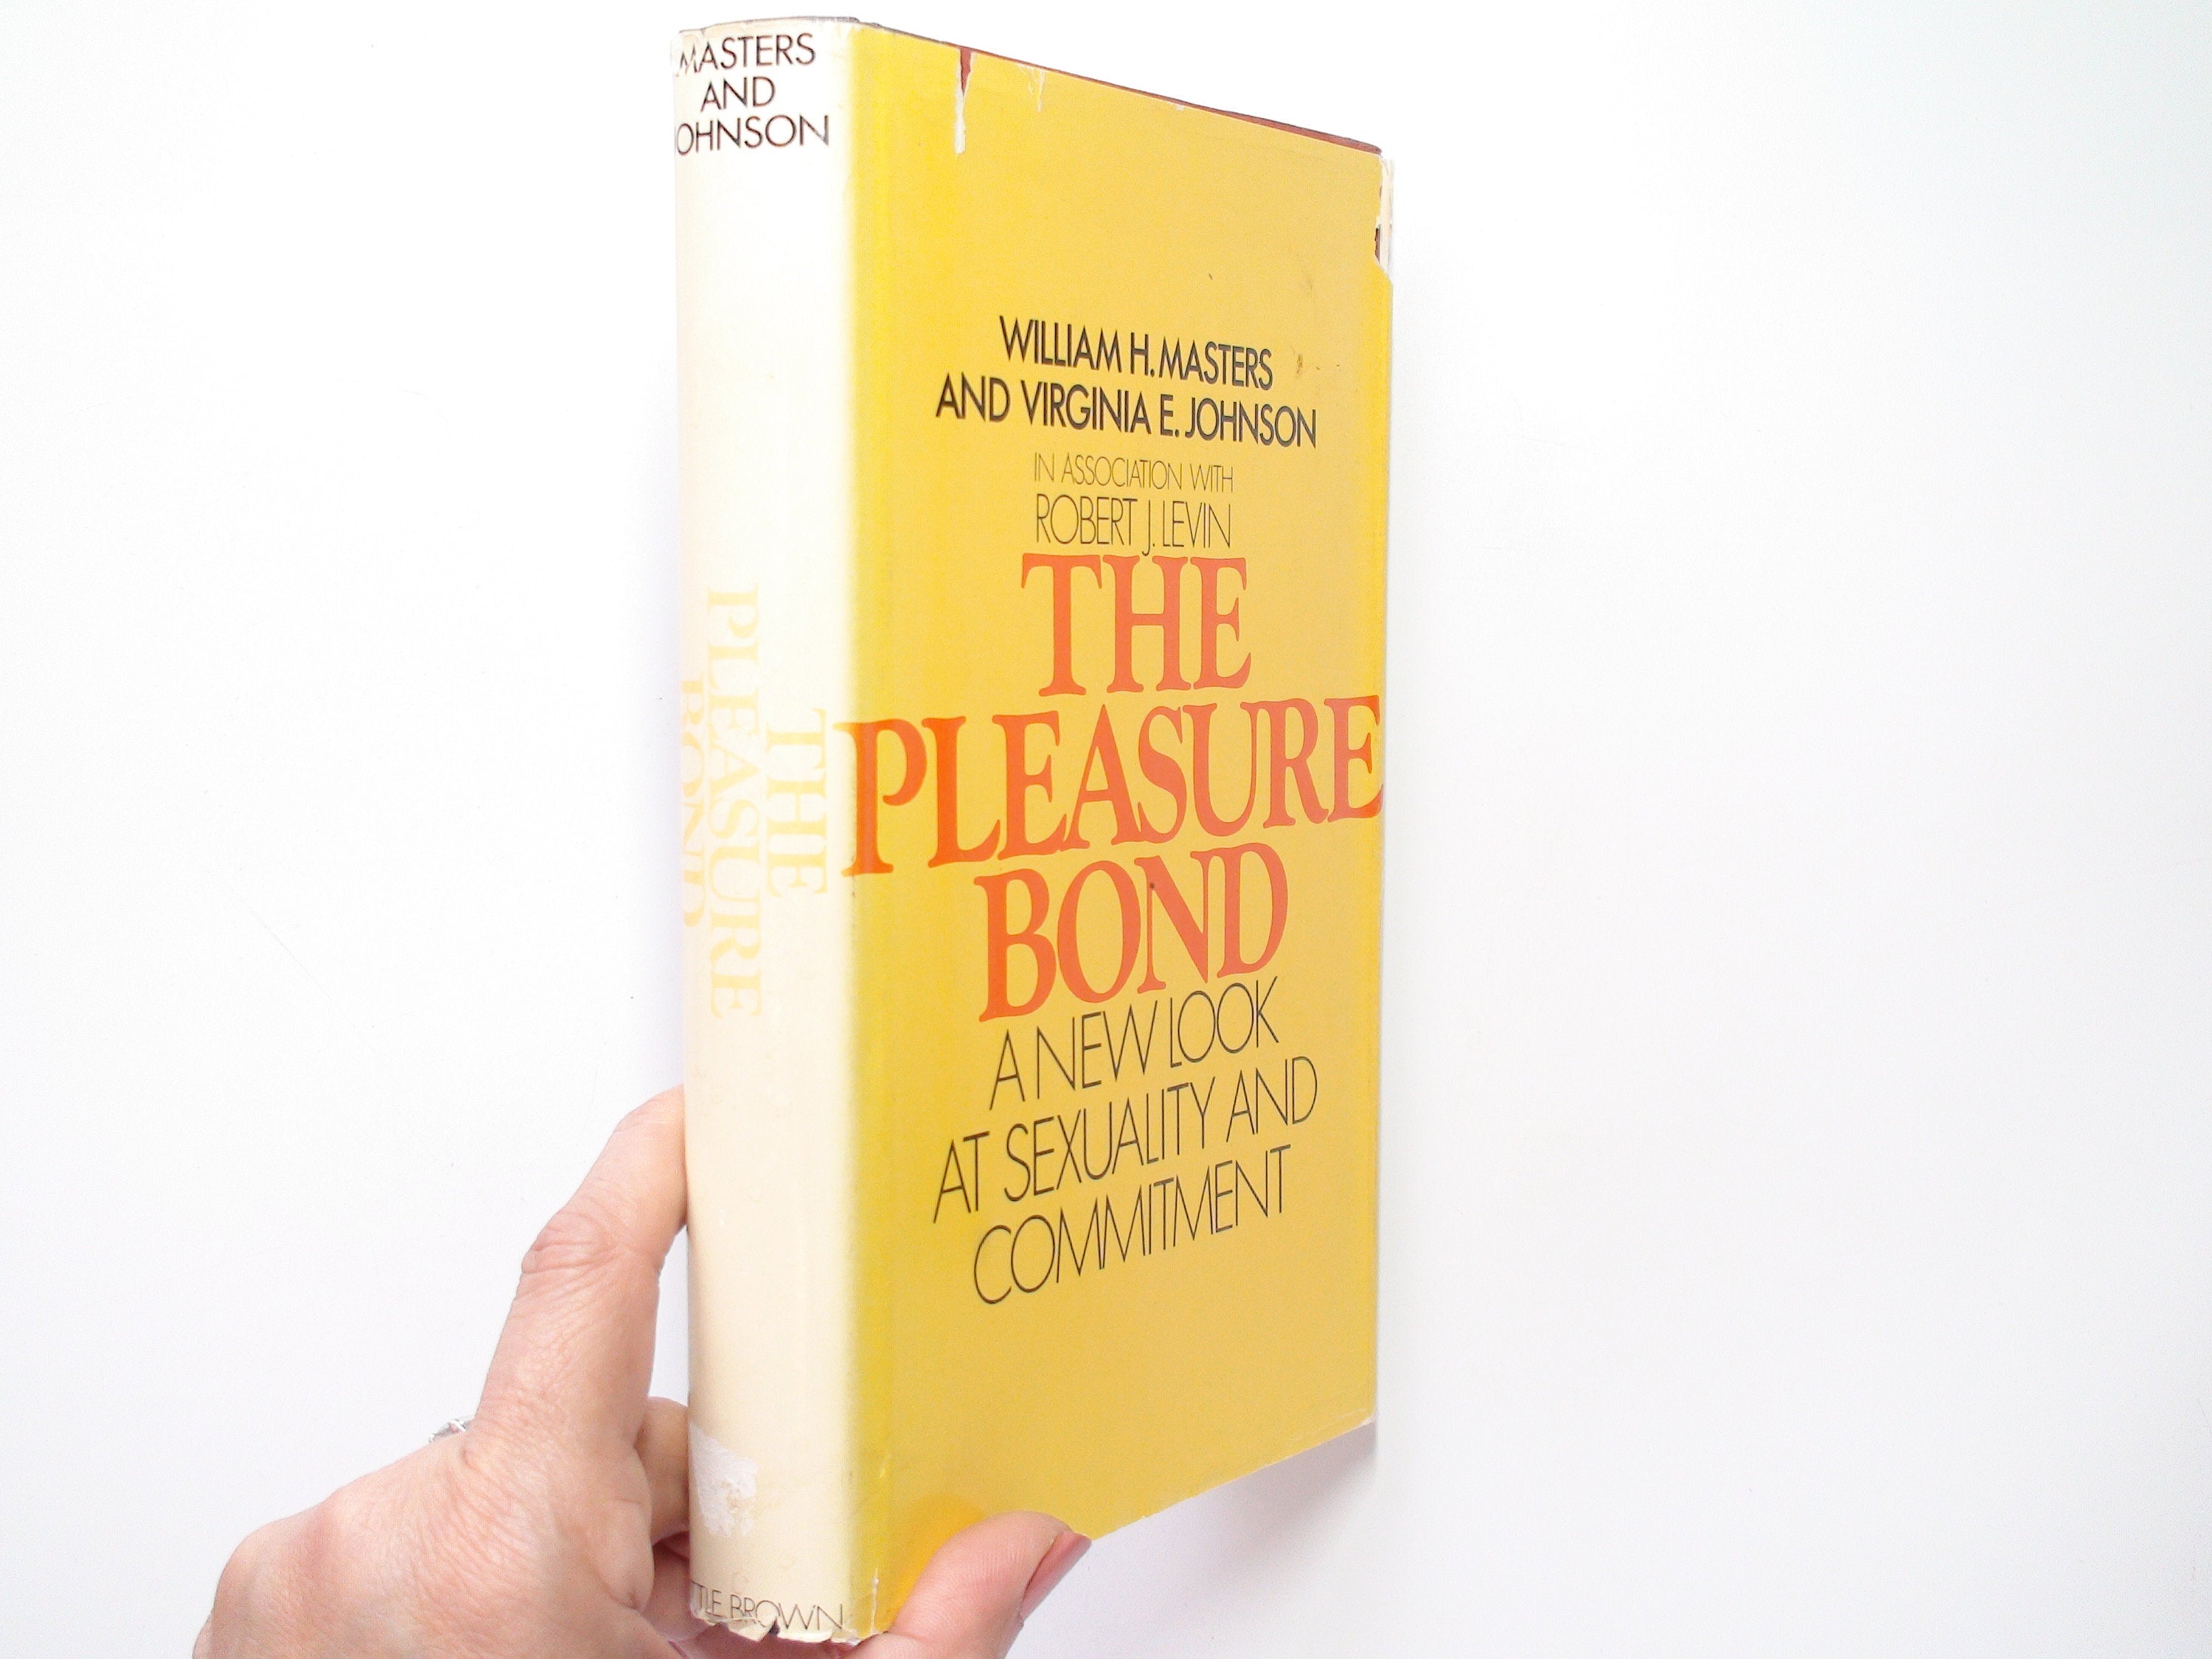 The Pleasure Bond by William H. Masters and Virginia E.Johnson, 1st Ed, 1974